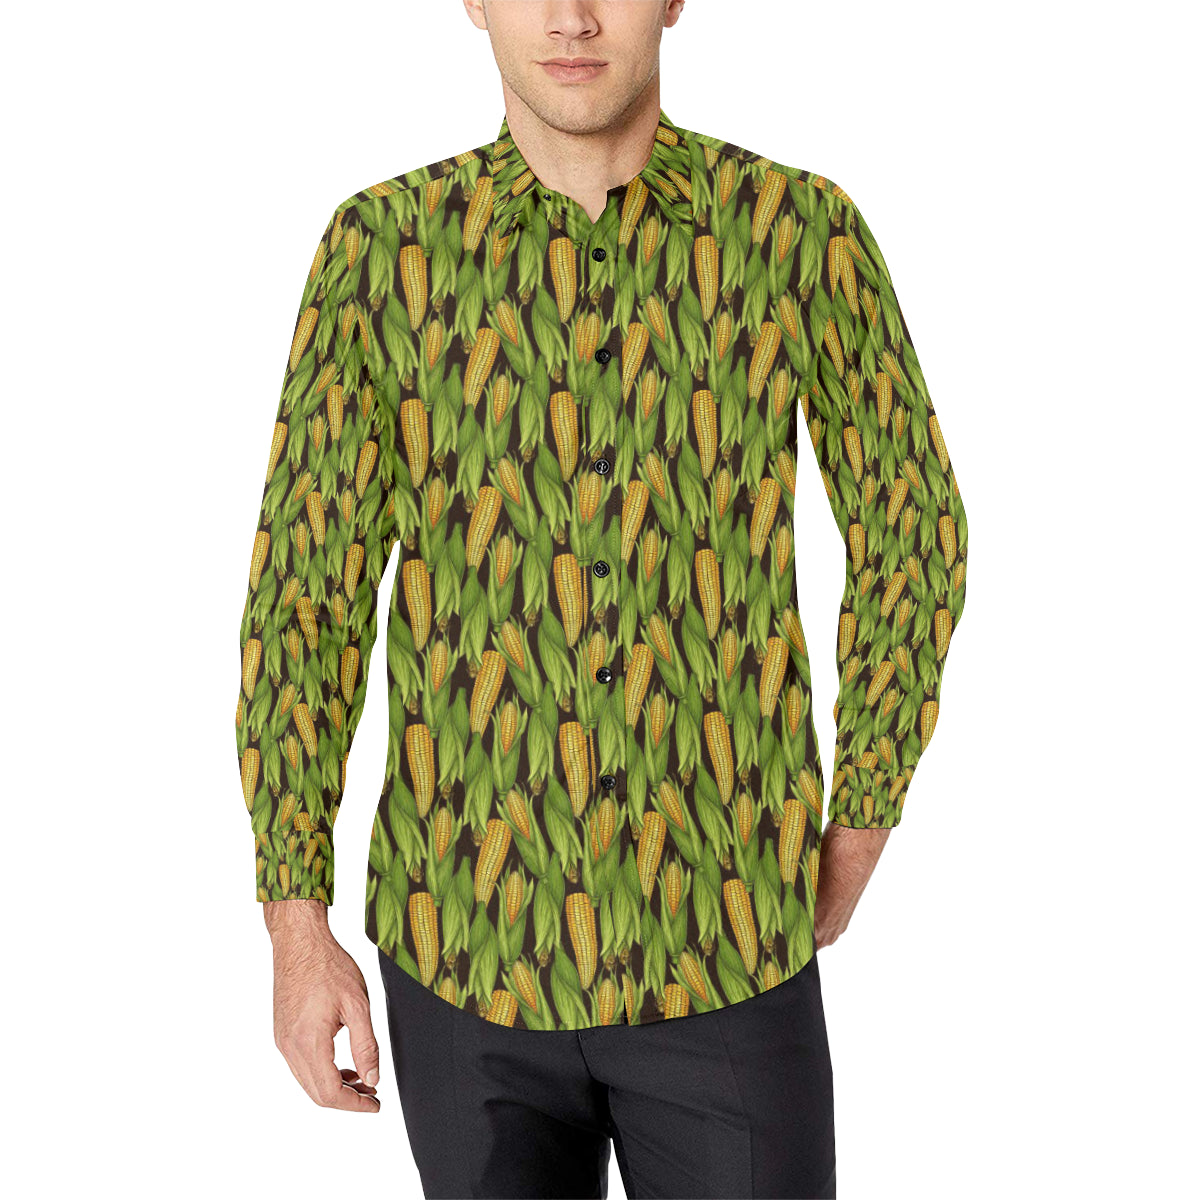 Agricultural Corn cob Print Men's Long Sleeve Shirt